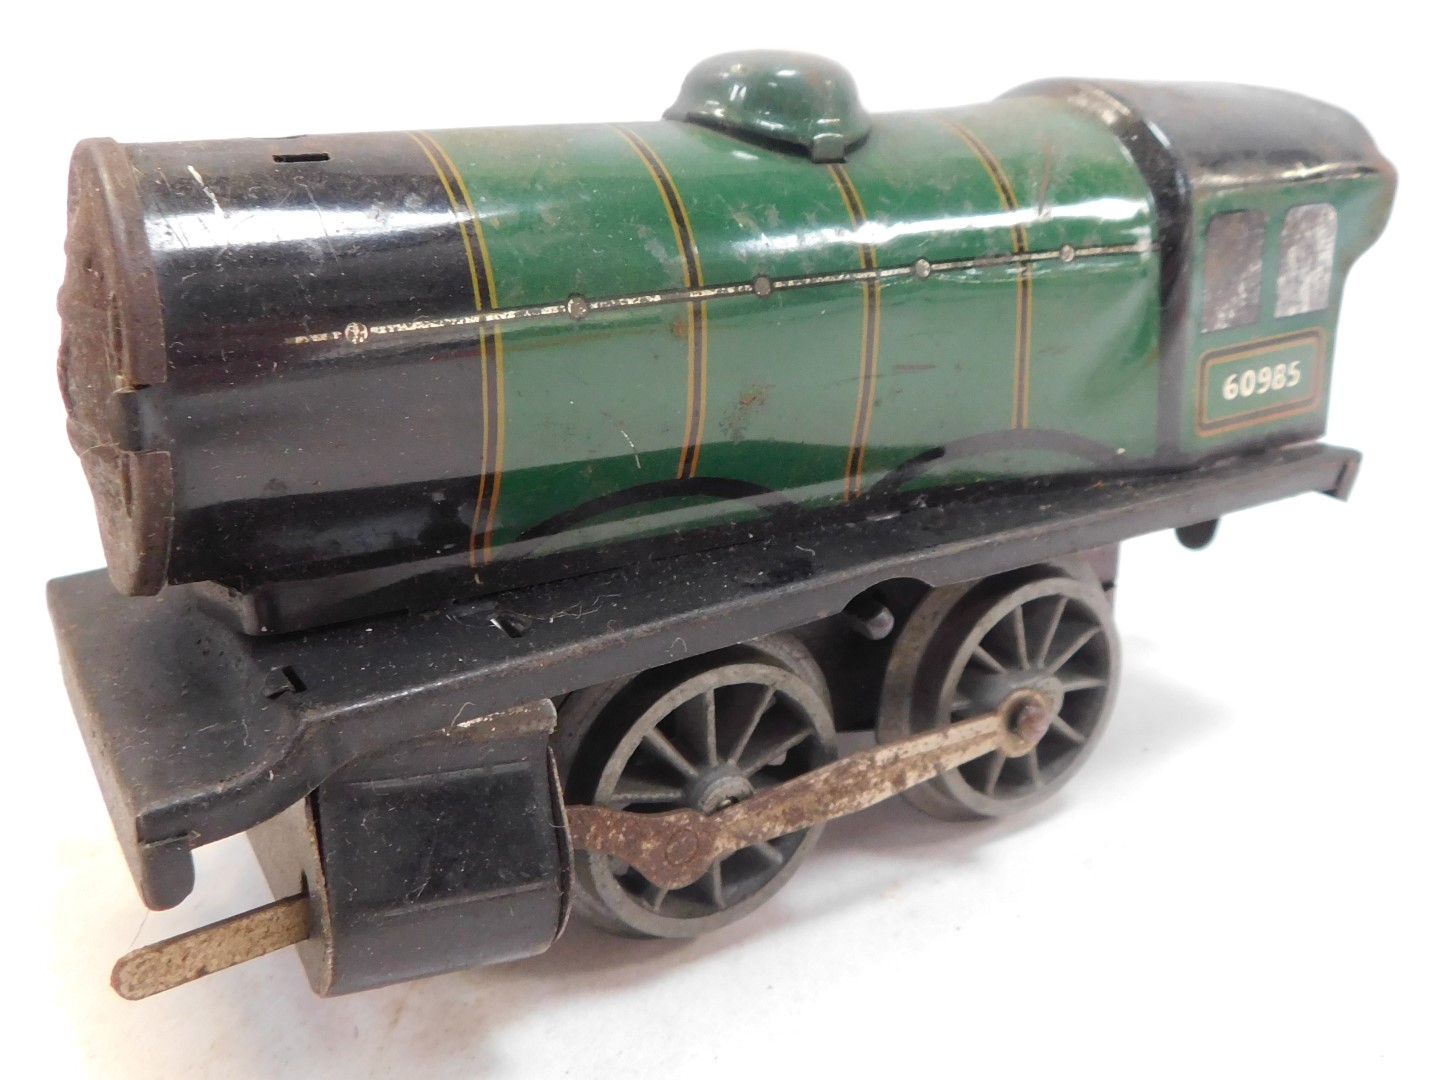 A Hornby O gauge clockwork tinplate train set, including 0-4-0 locomotive, plank wagons and track. - Image 2 of 2